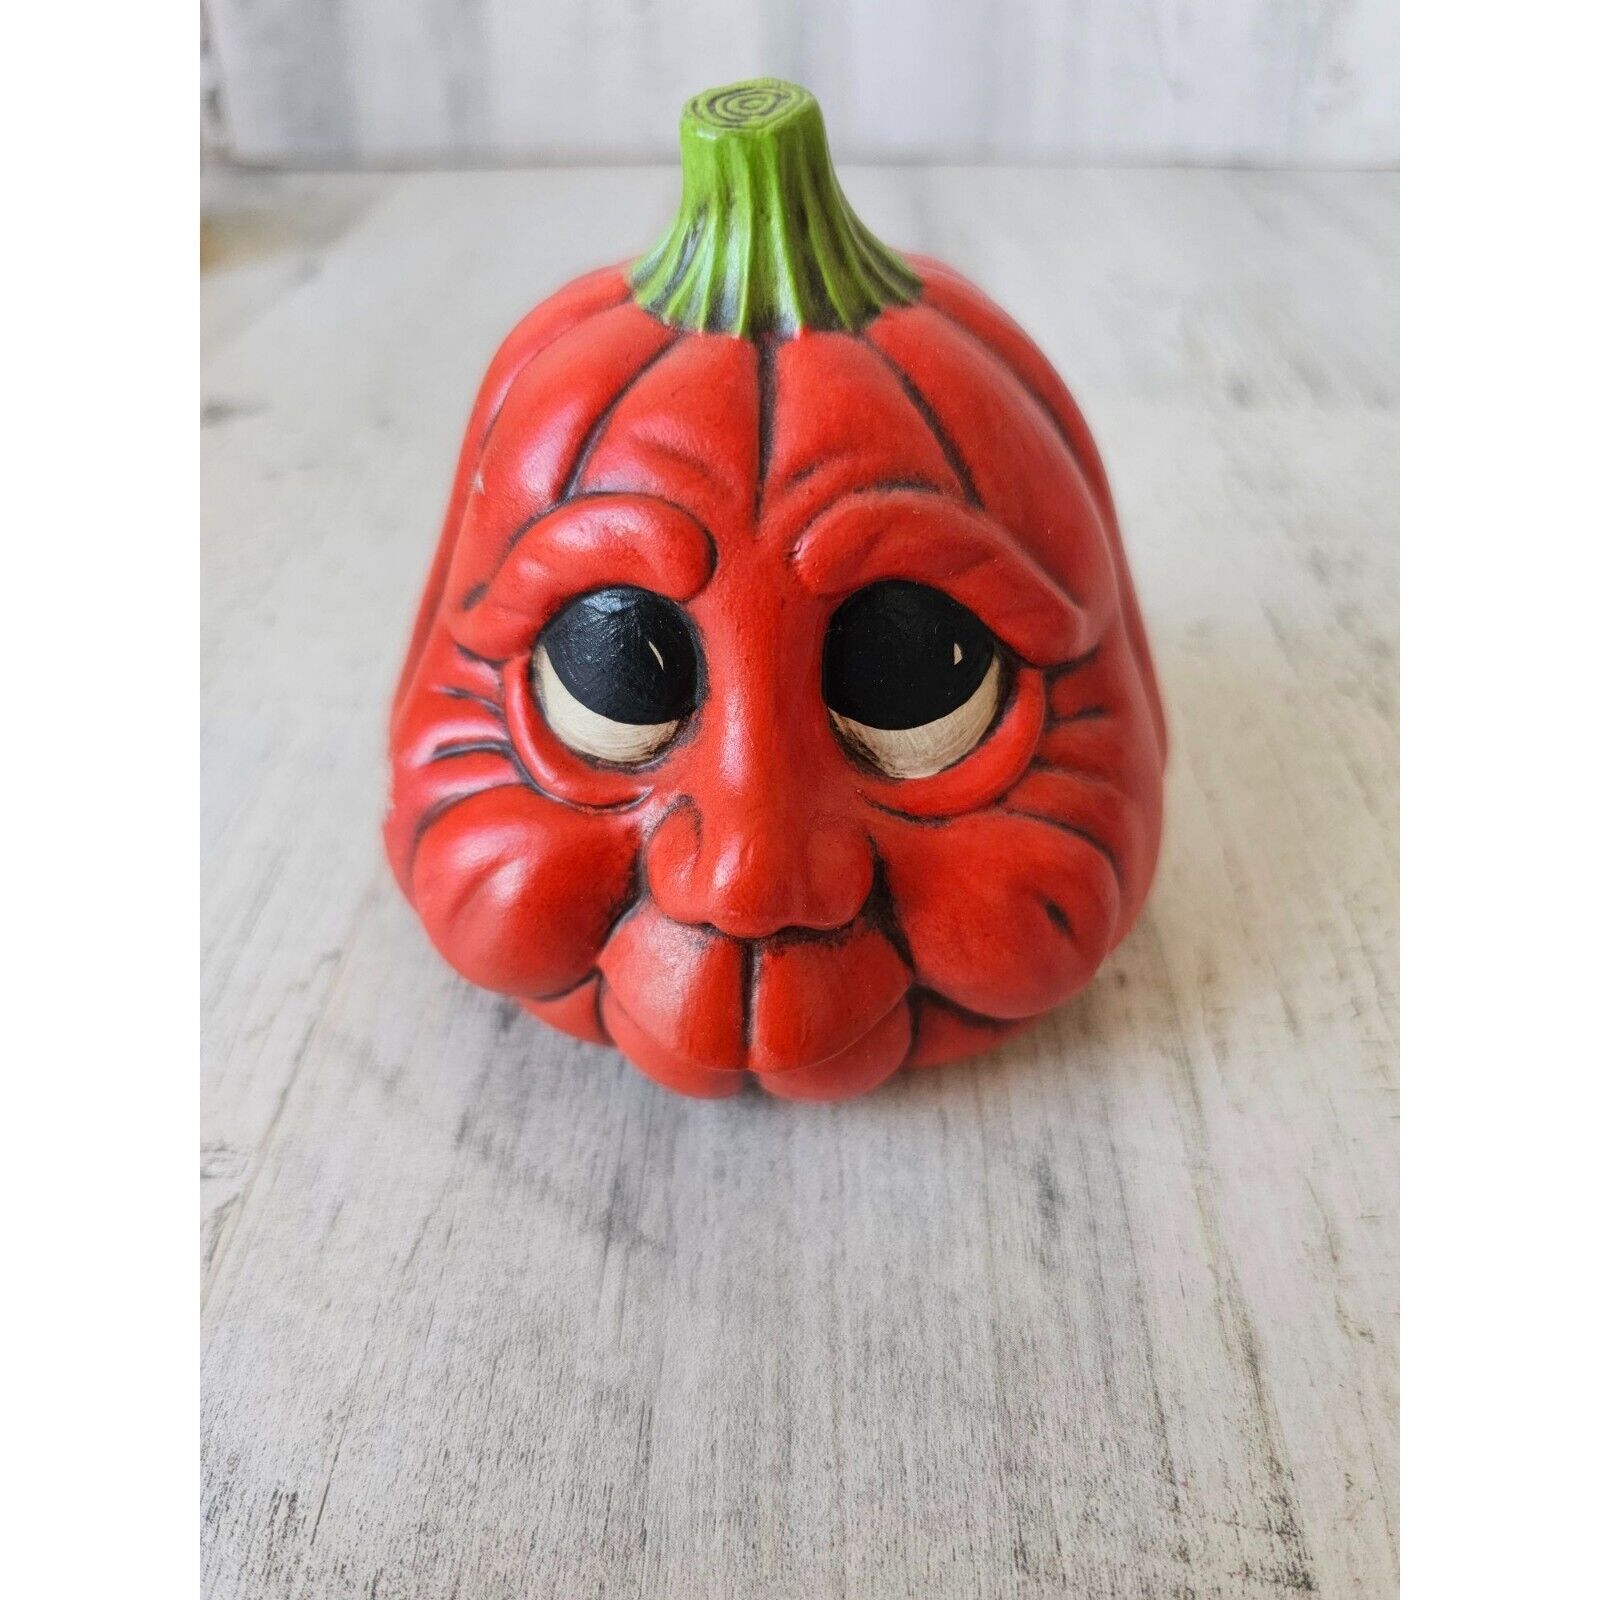 Anthropomorphic pumpkin jack-o\'-lantern Halloween vintage decor ceramic